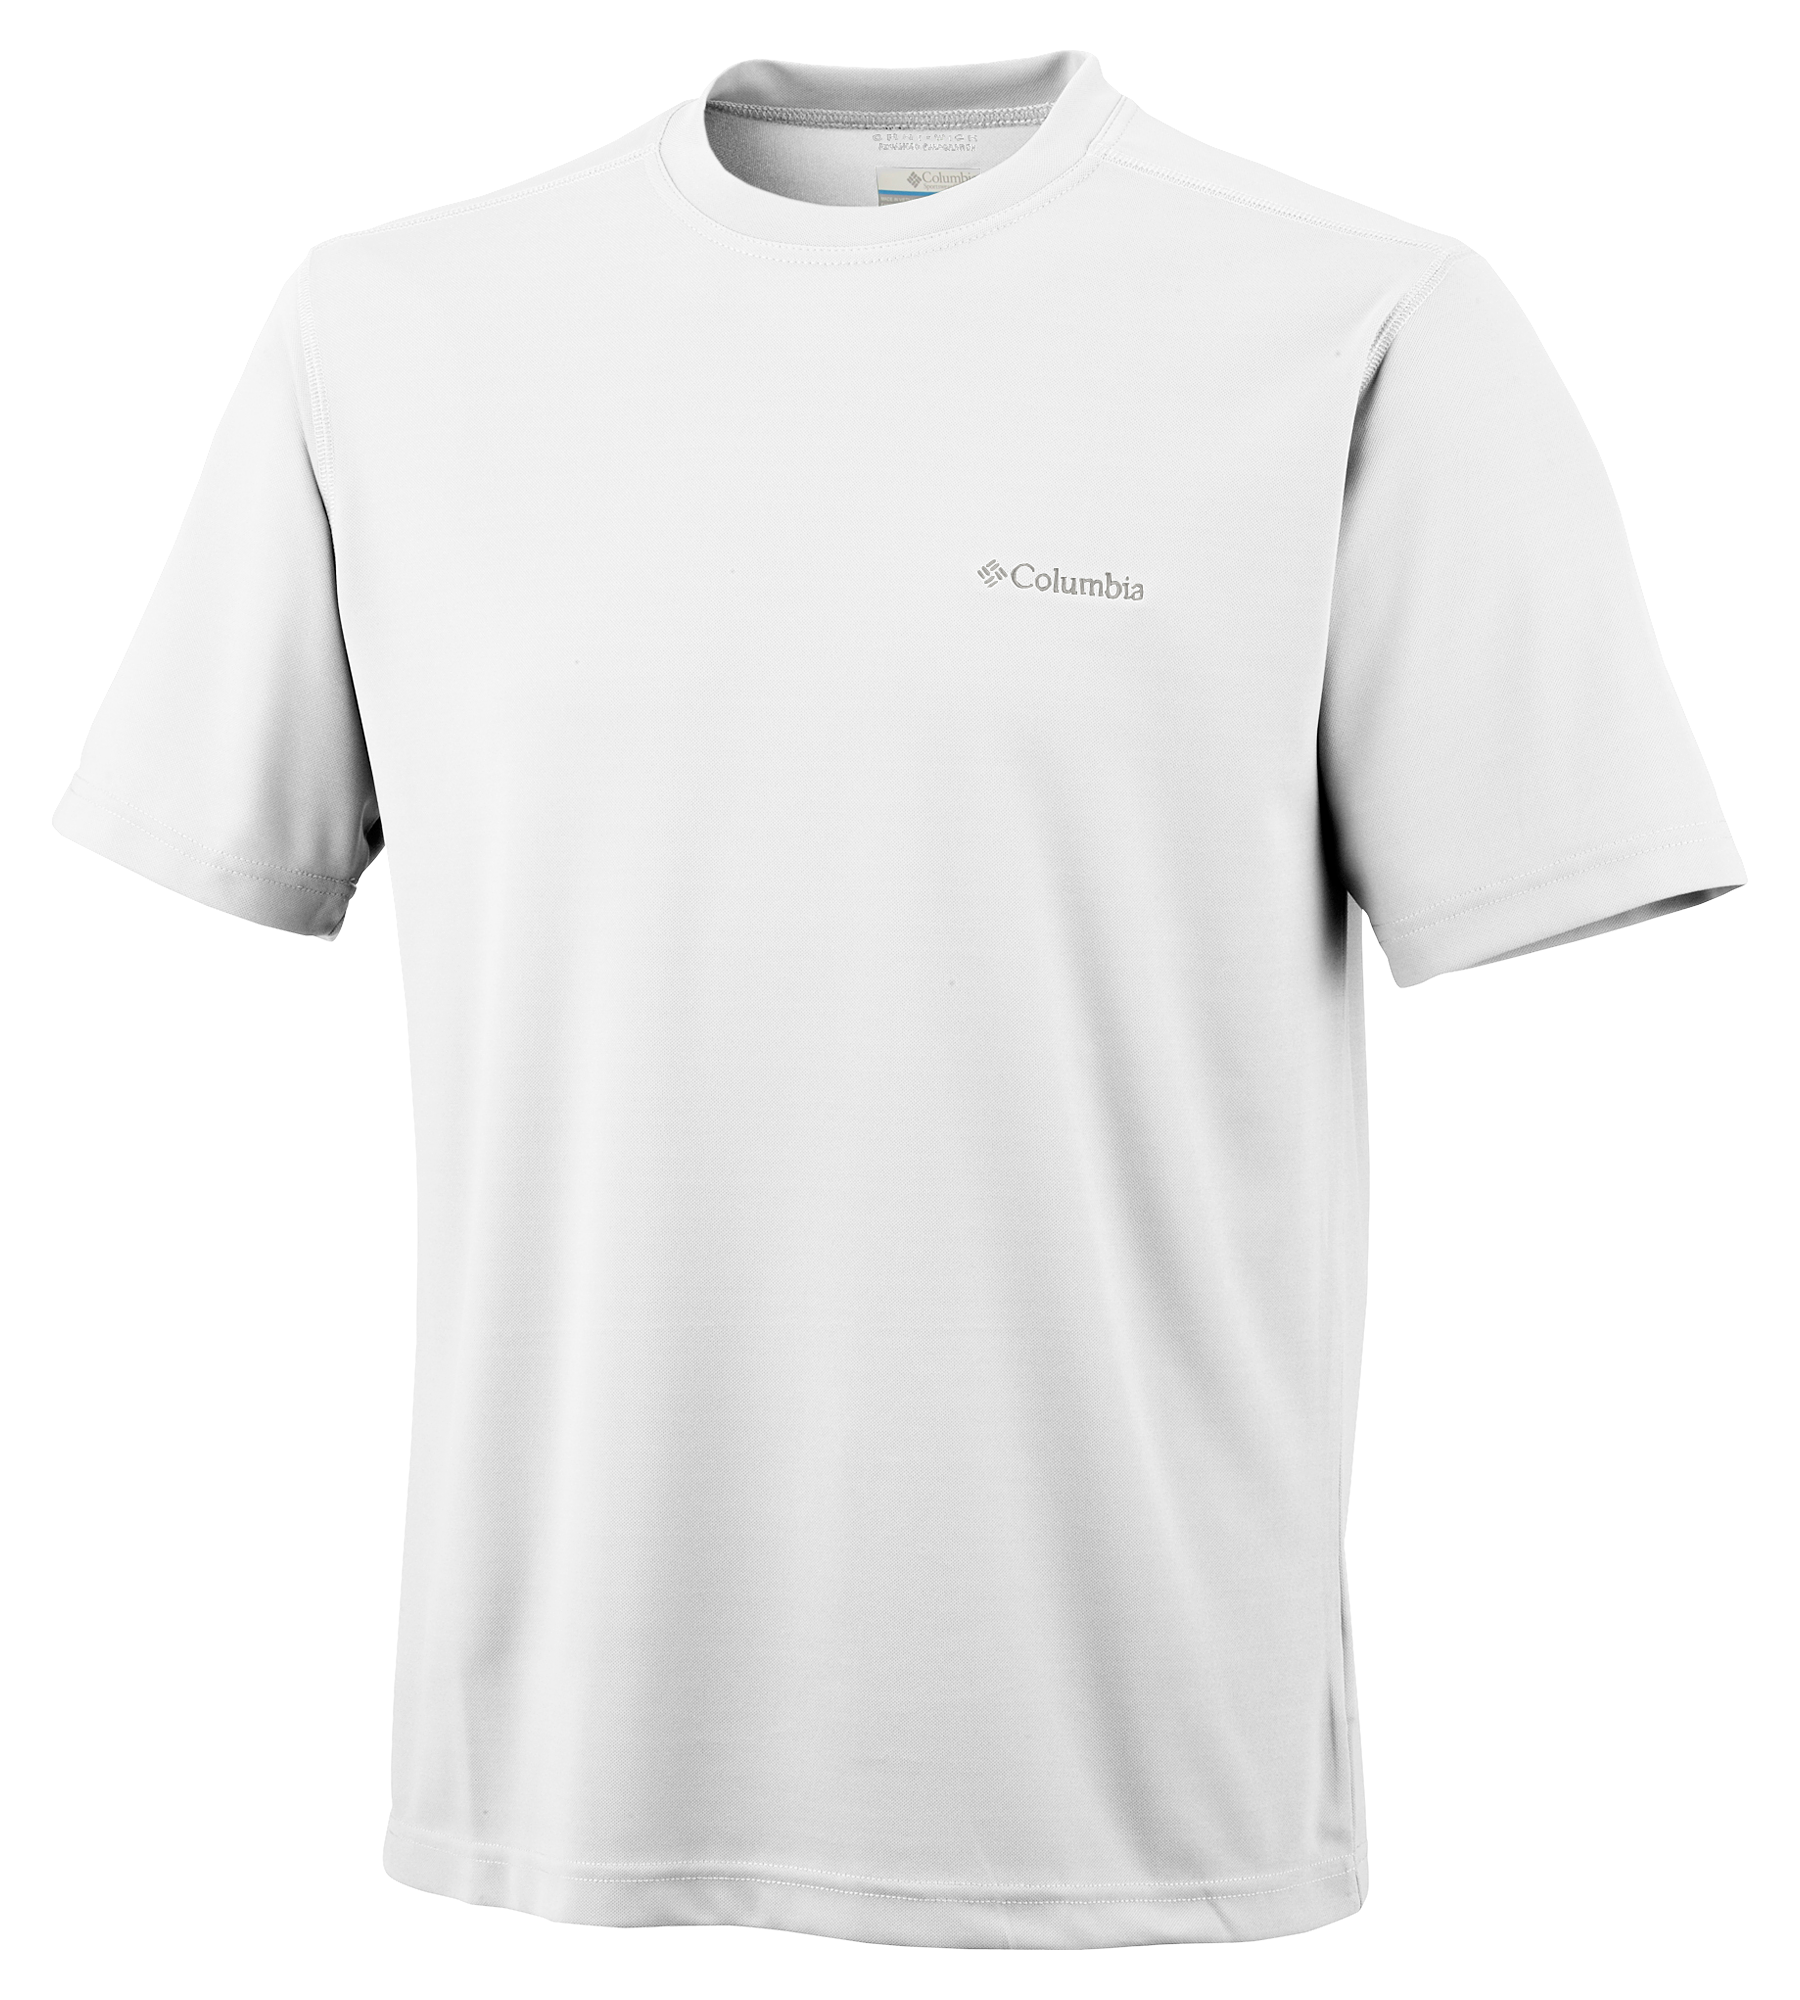 Columbia Hike Crew Short Sleeve T-Shirt Black S Man